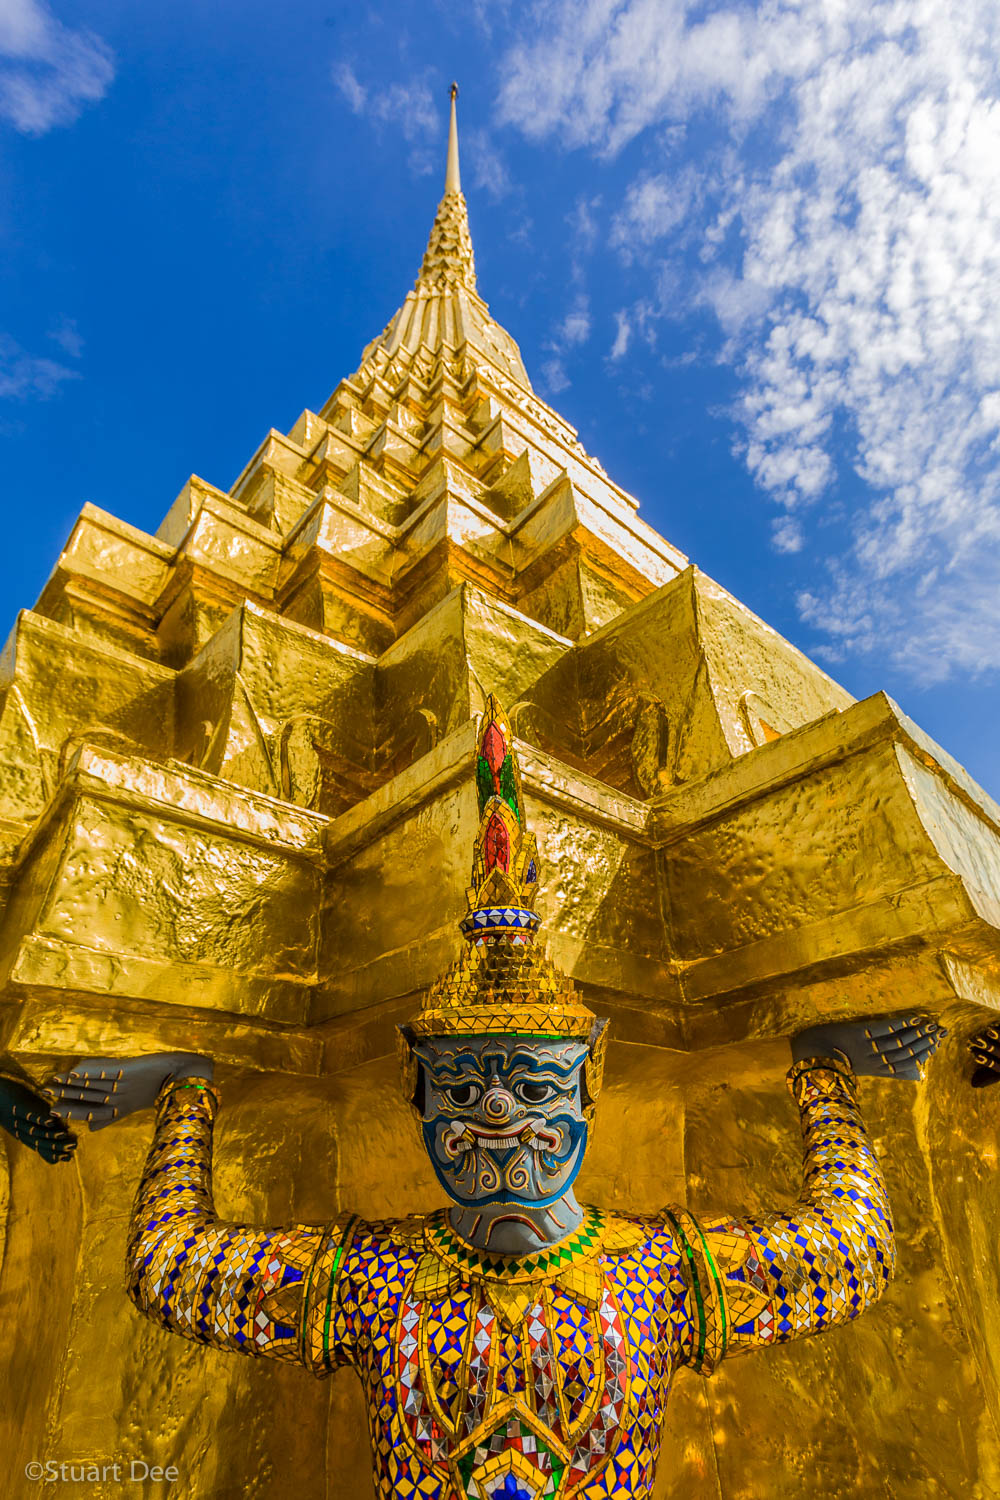  Yaksha(s) supporting a golden chedi. Grand Palace; Temple of the Emerald Buddha (Wat Phra Kaew), Bangkok, Thailand 